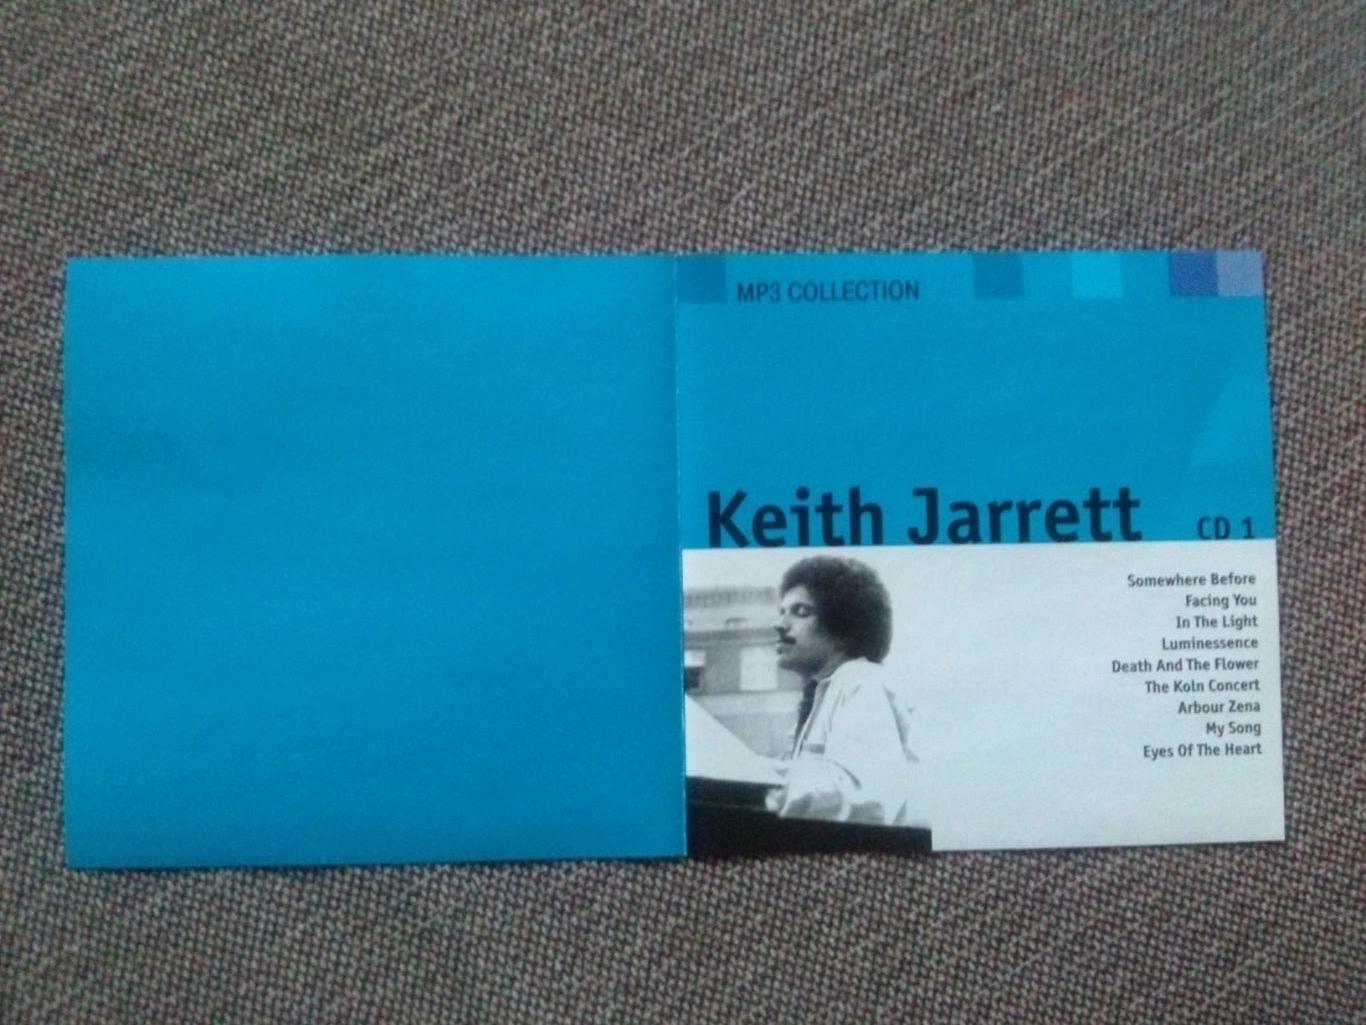 MP - 3 CD : Keith Jarrett (9 альбомов) 1968 - 1979 гг. Джаз Jazz Рок музыка 2